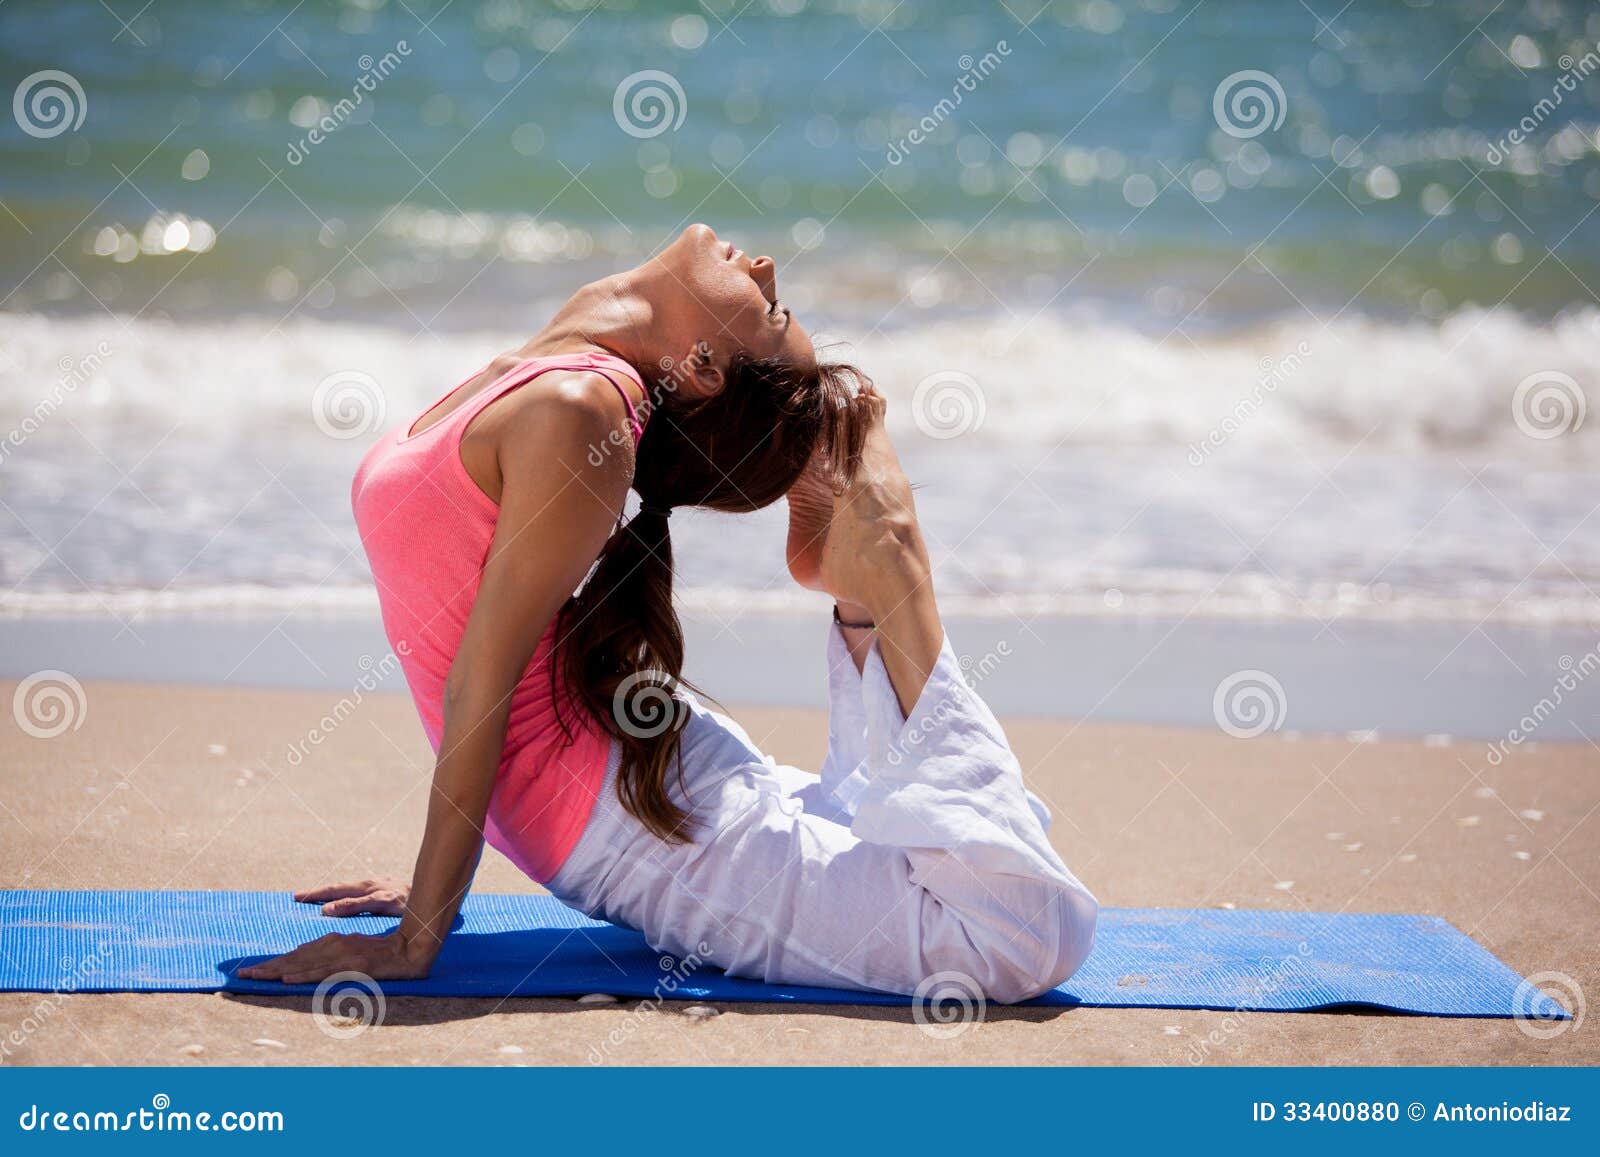 Dhanurasana(Bow Pose): How to Do, Benefits and Precautions - Fitsri Yoga